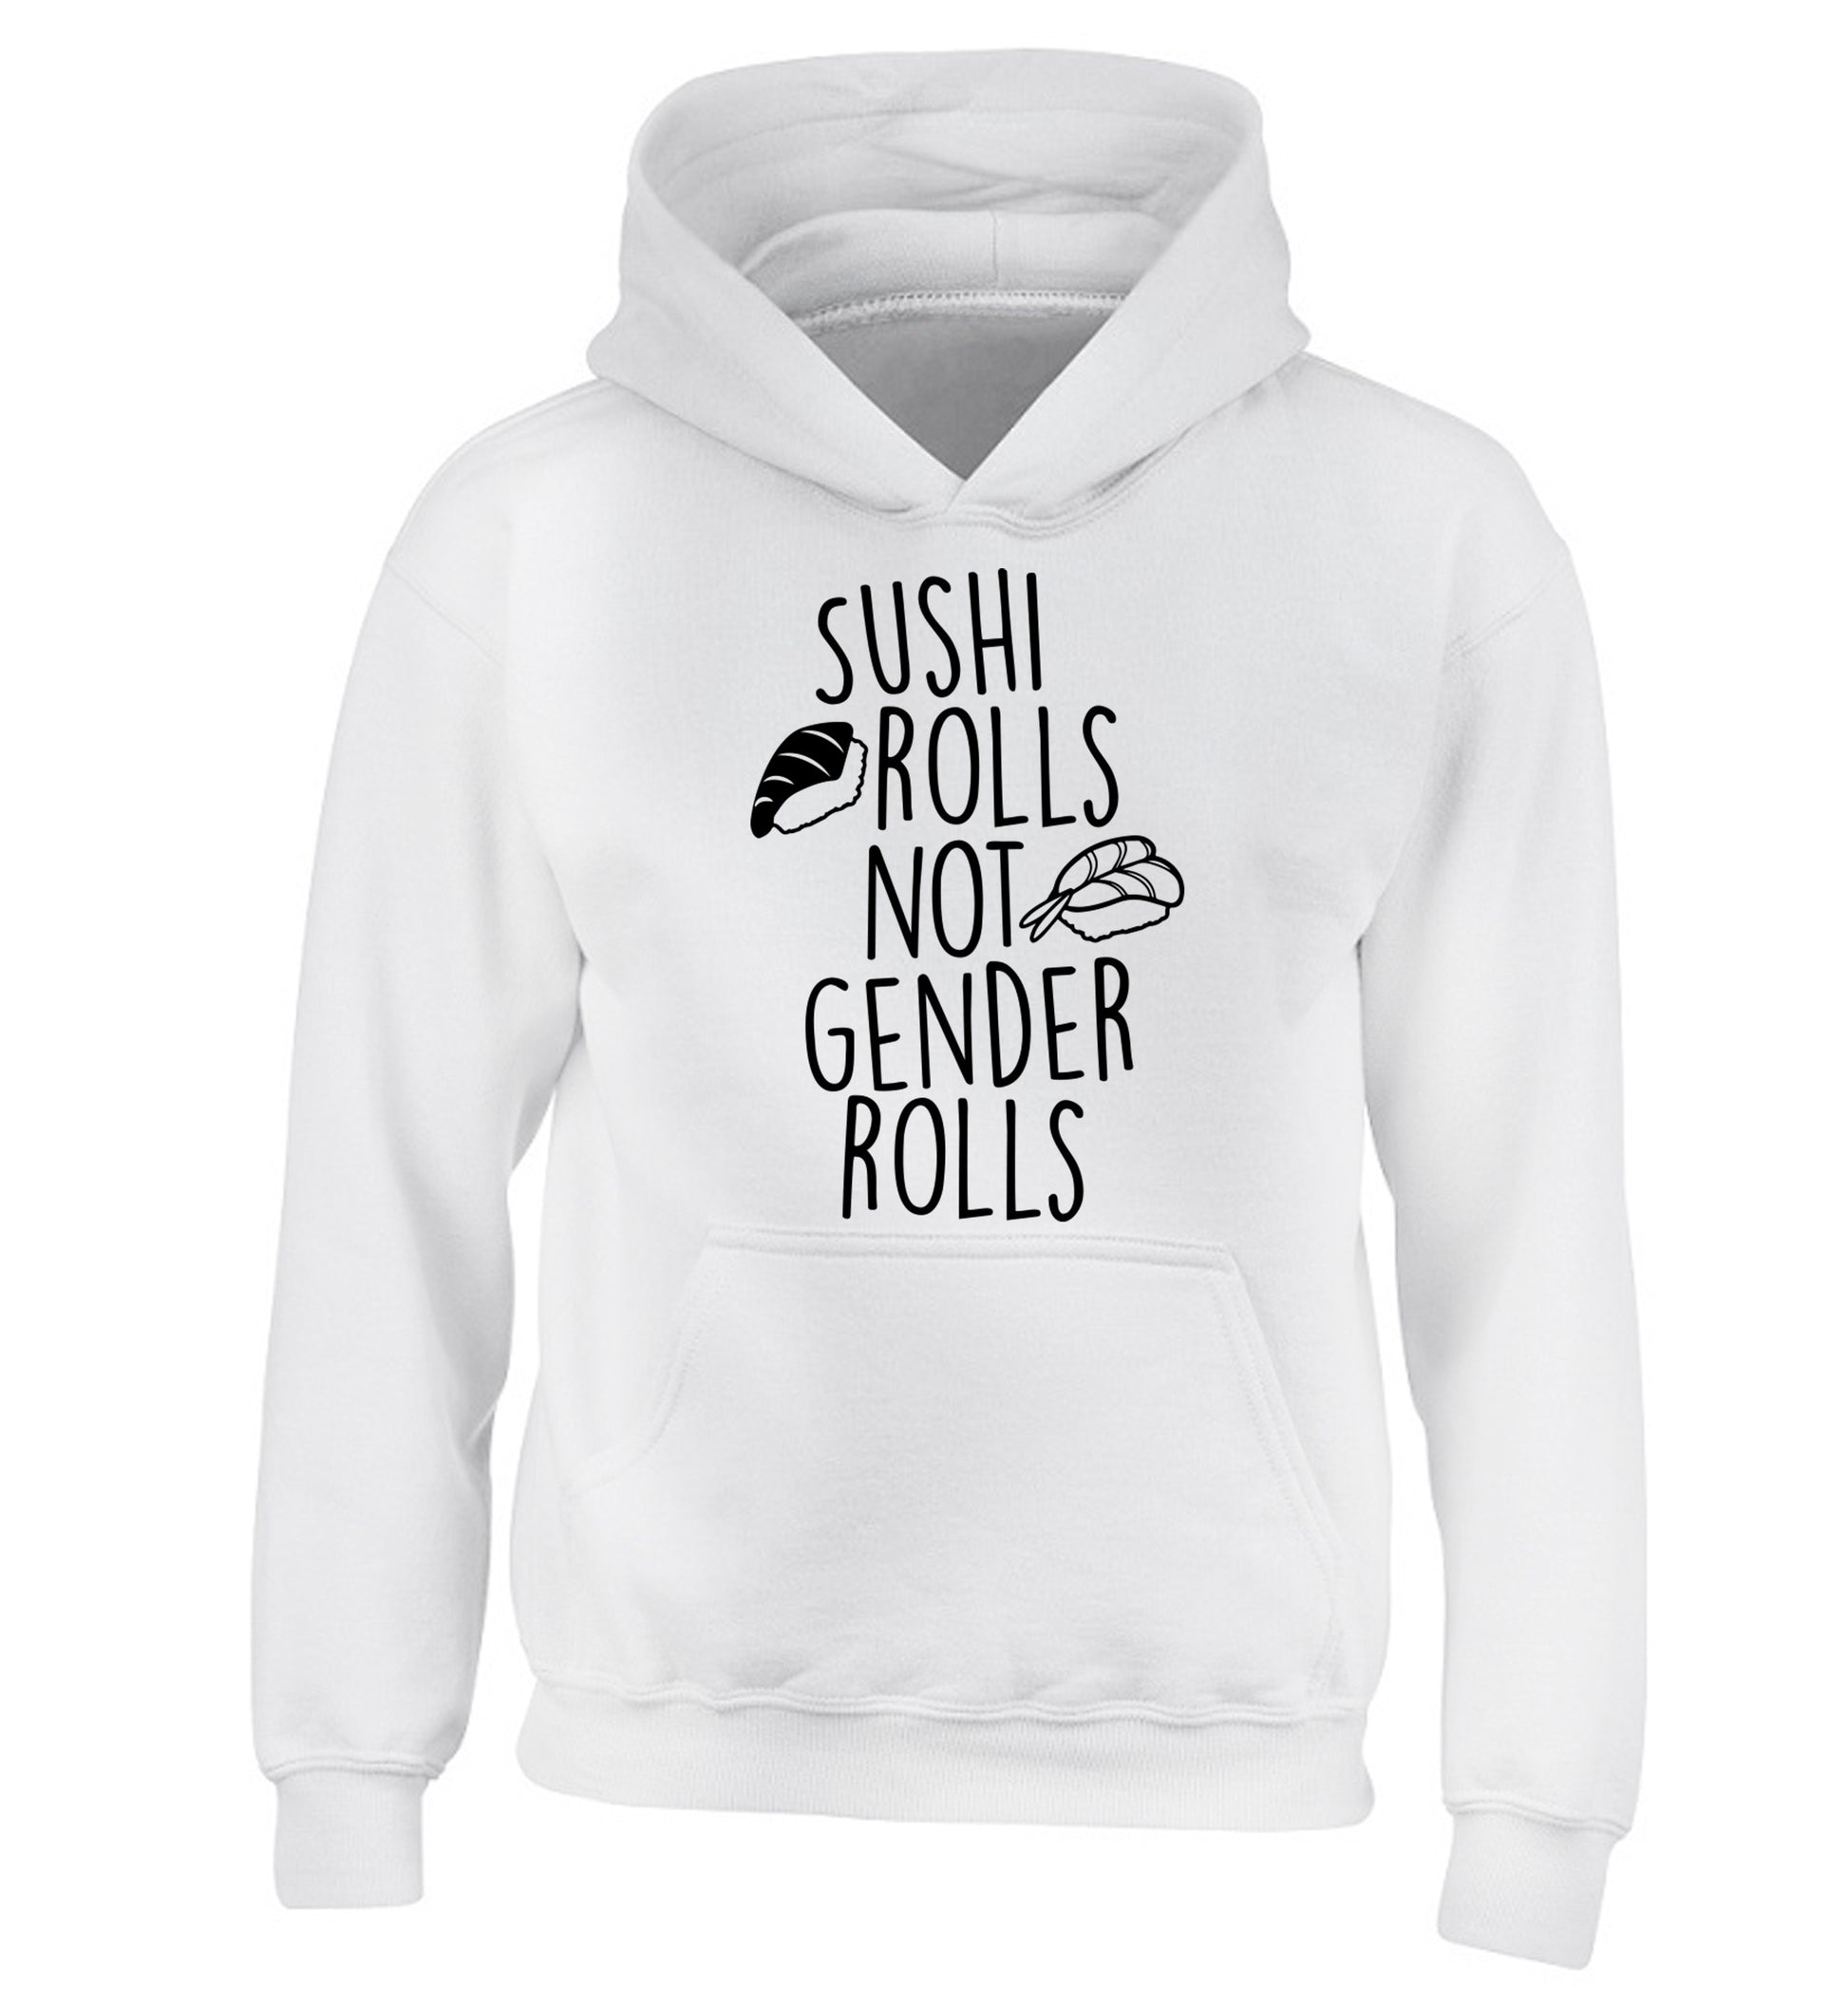 Sushi rolls not gender rolls children's white hoodie 12-14 Years